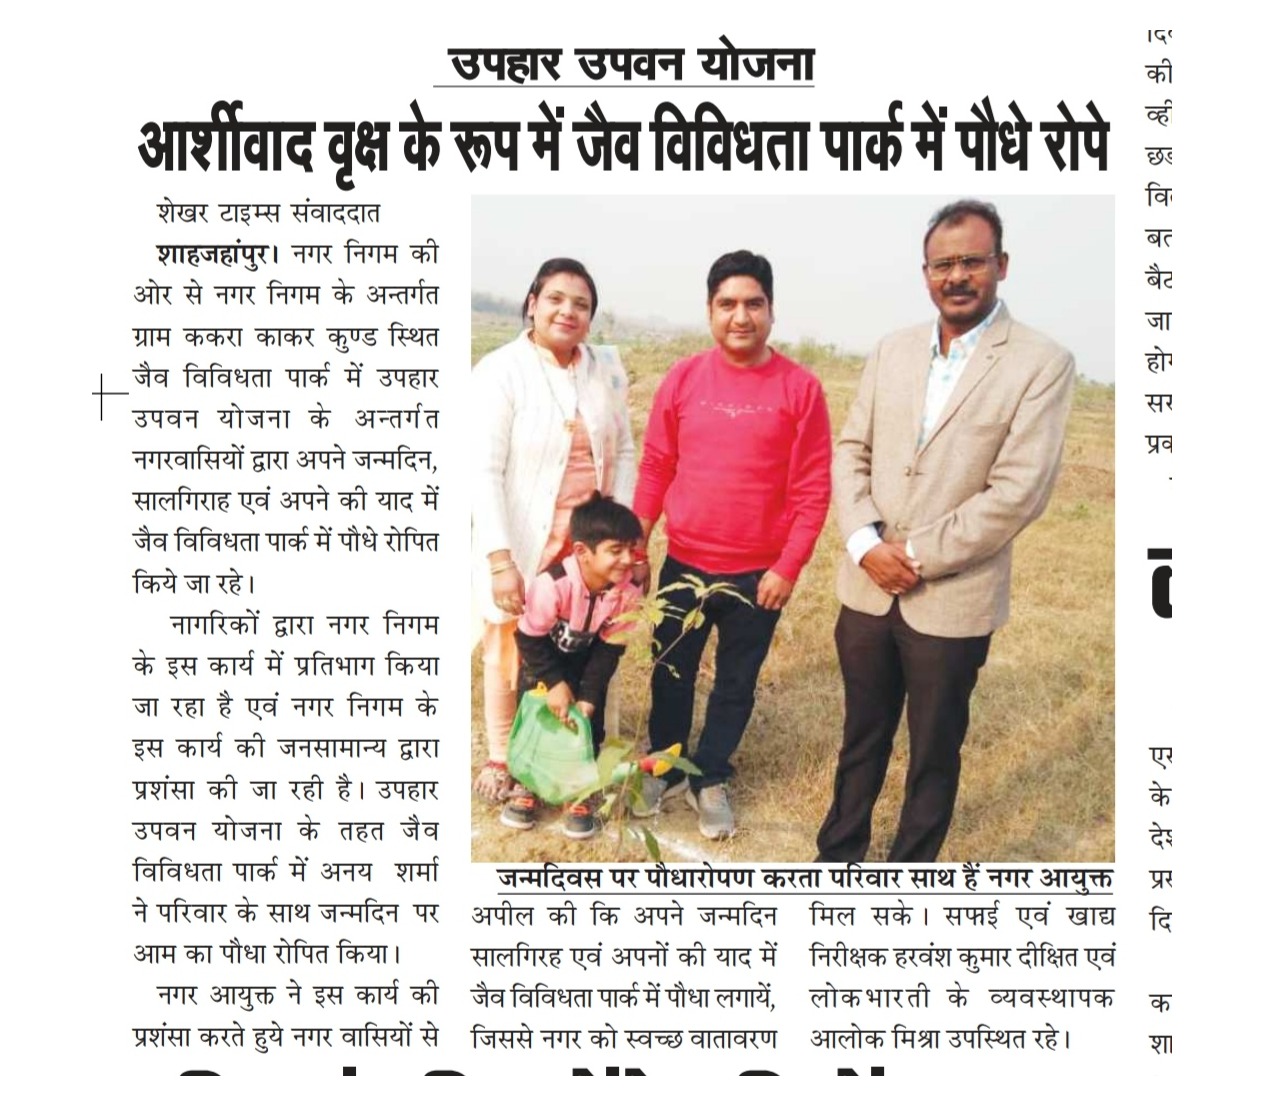 Regarding plantation by citizens in the Bio Diversity Park located at Kakra Kakar Kund under Uphar Upvan Yojna in Shahjahanpur